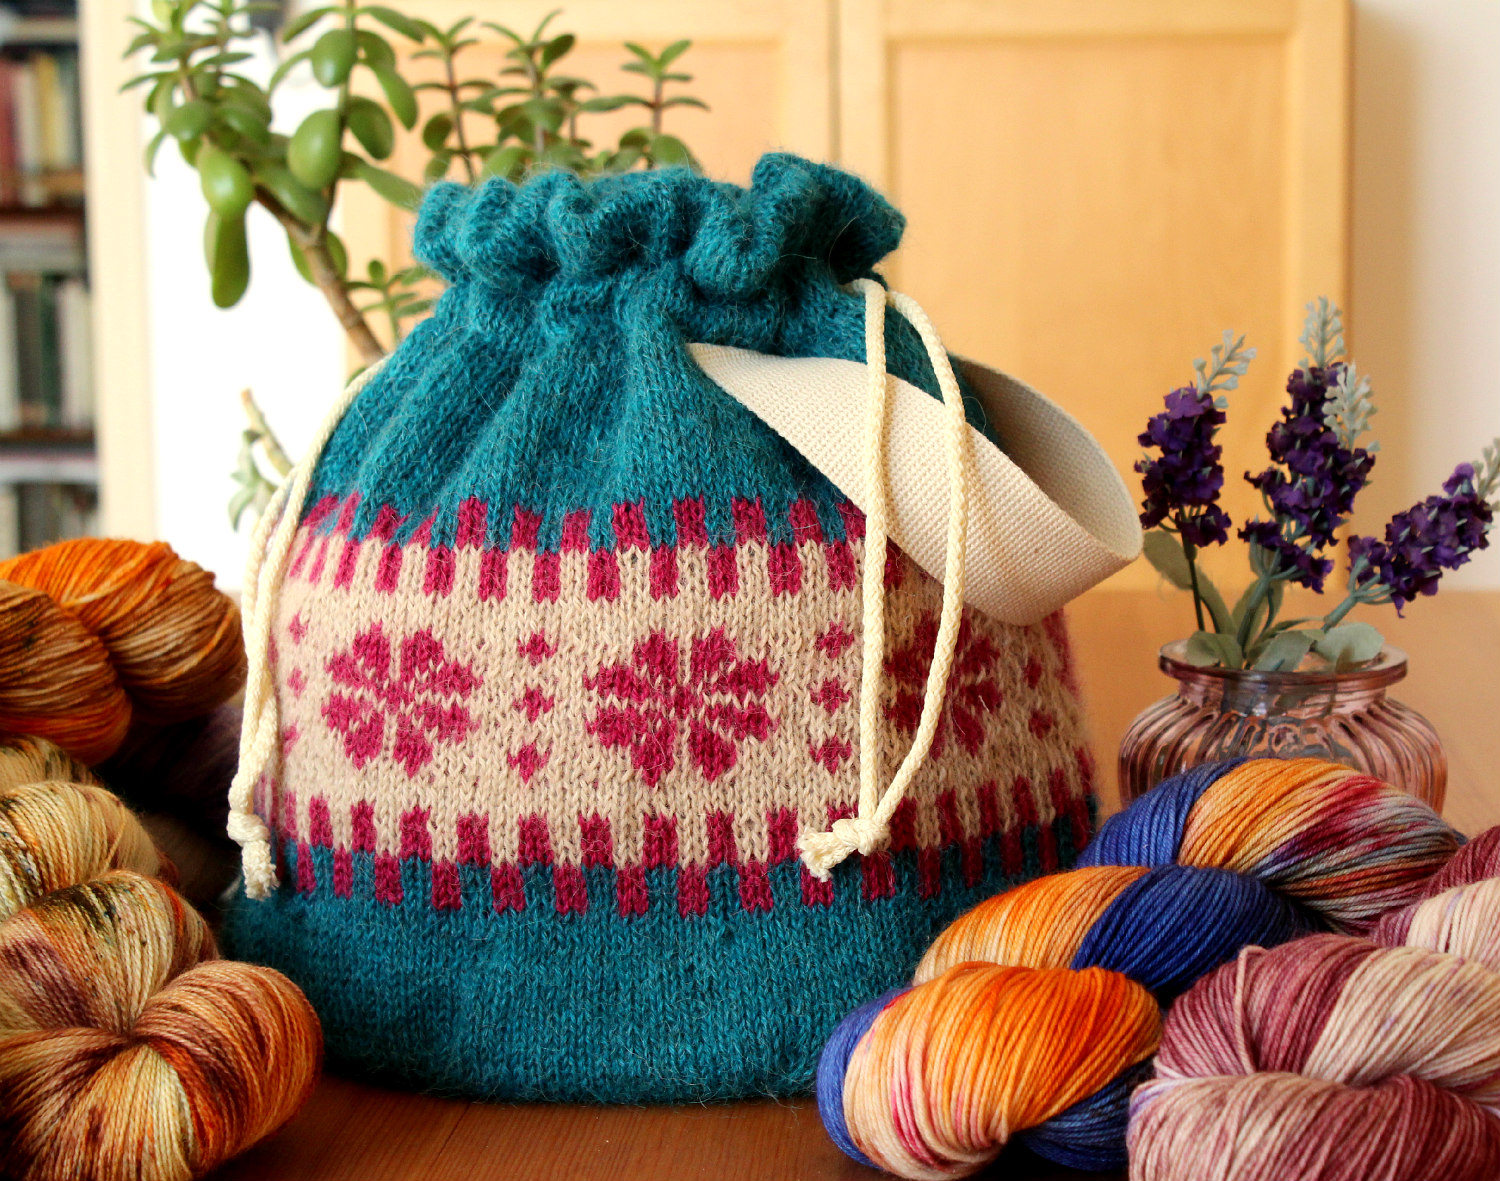 Knitting Project bag Fair Isle knit wristlet bag